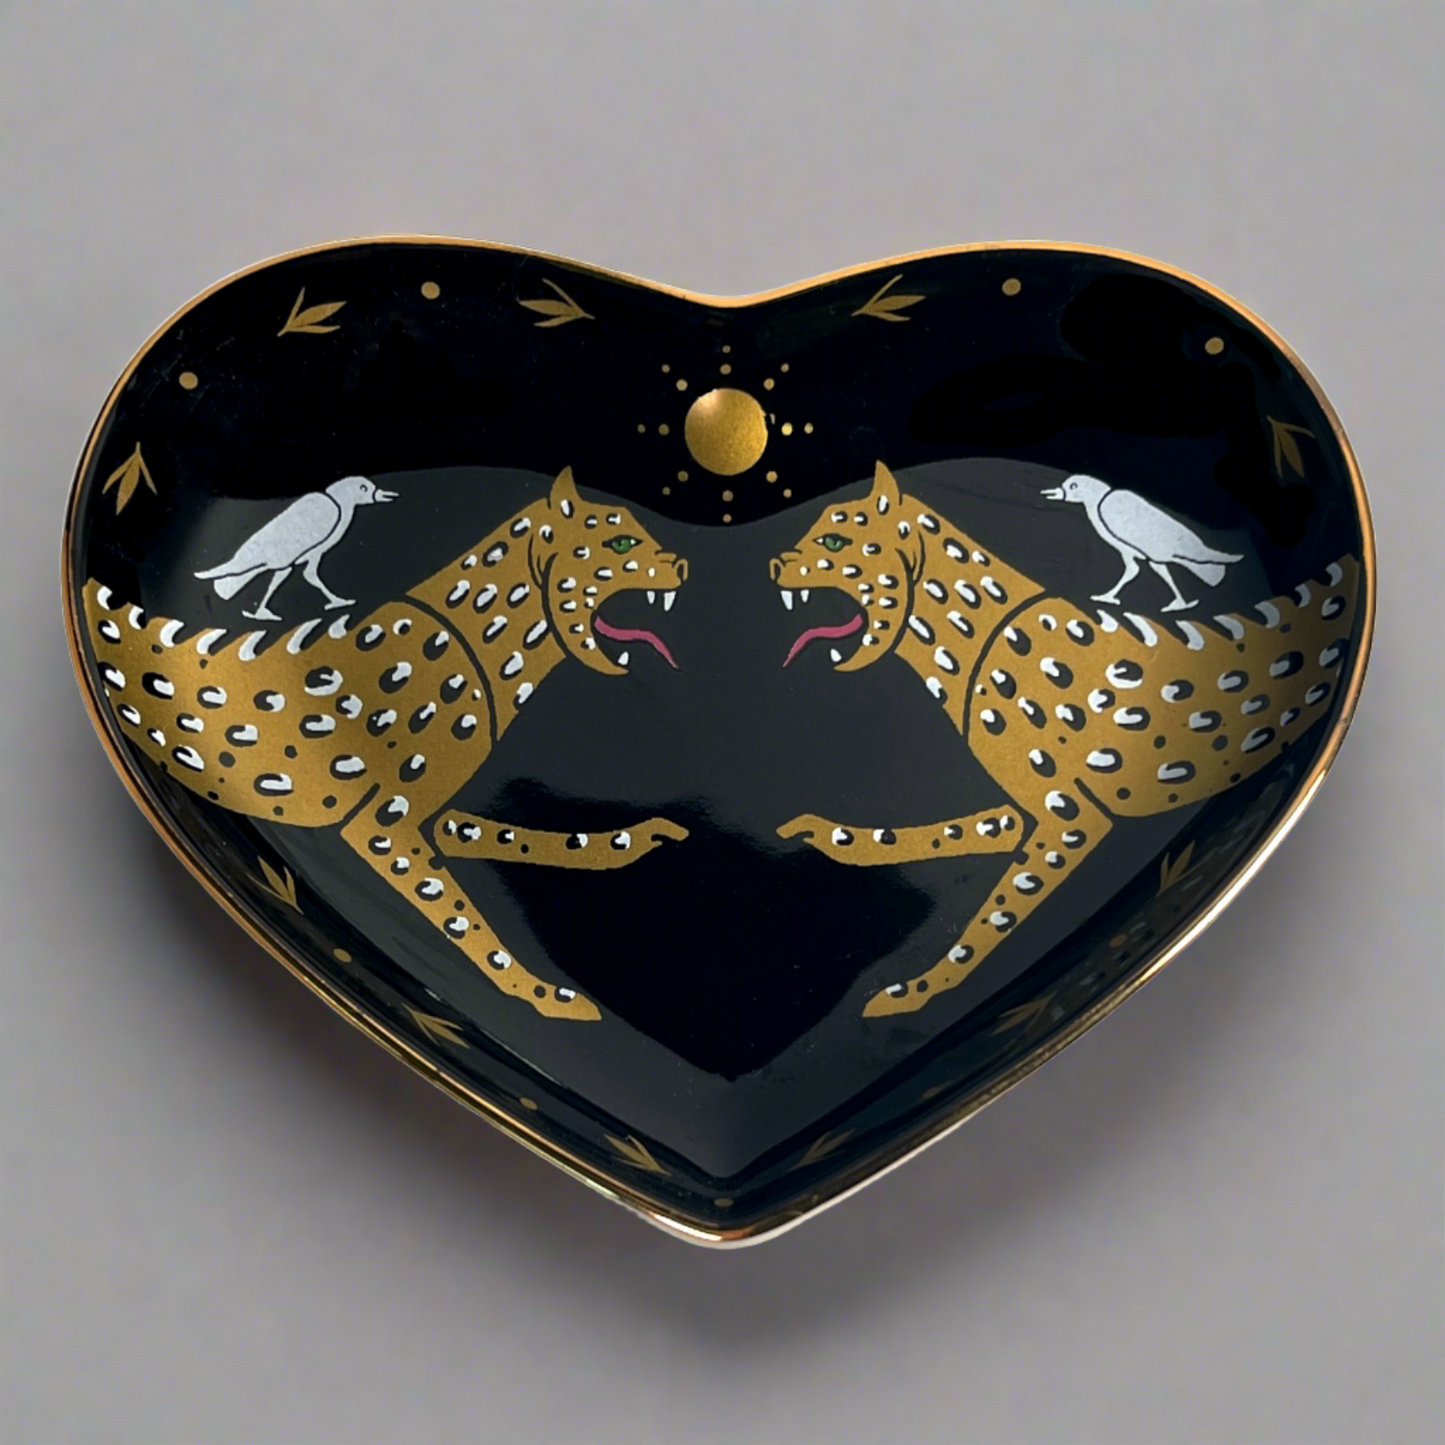 Spitfire Girl - Two Cheetahs Ceramic Heart Dish at LaSource in Darien